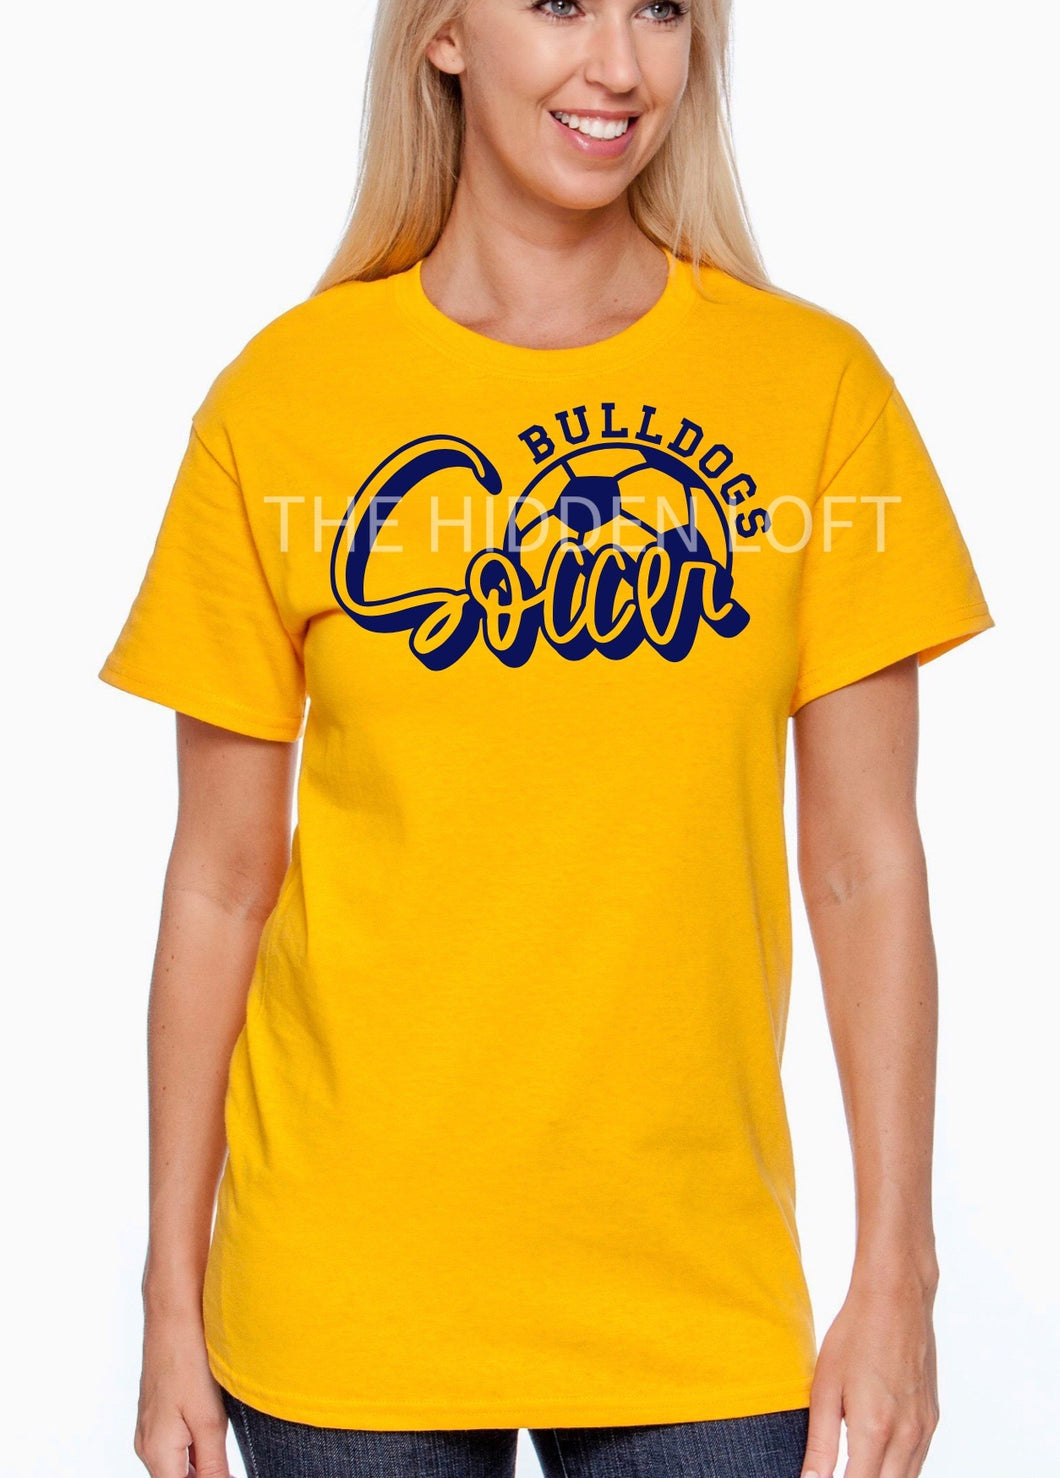 Bulldogs Soccer T-Shirt